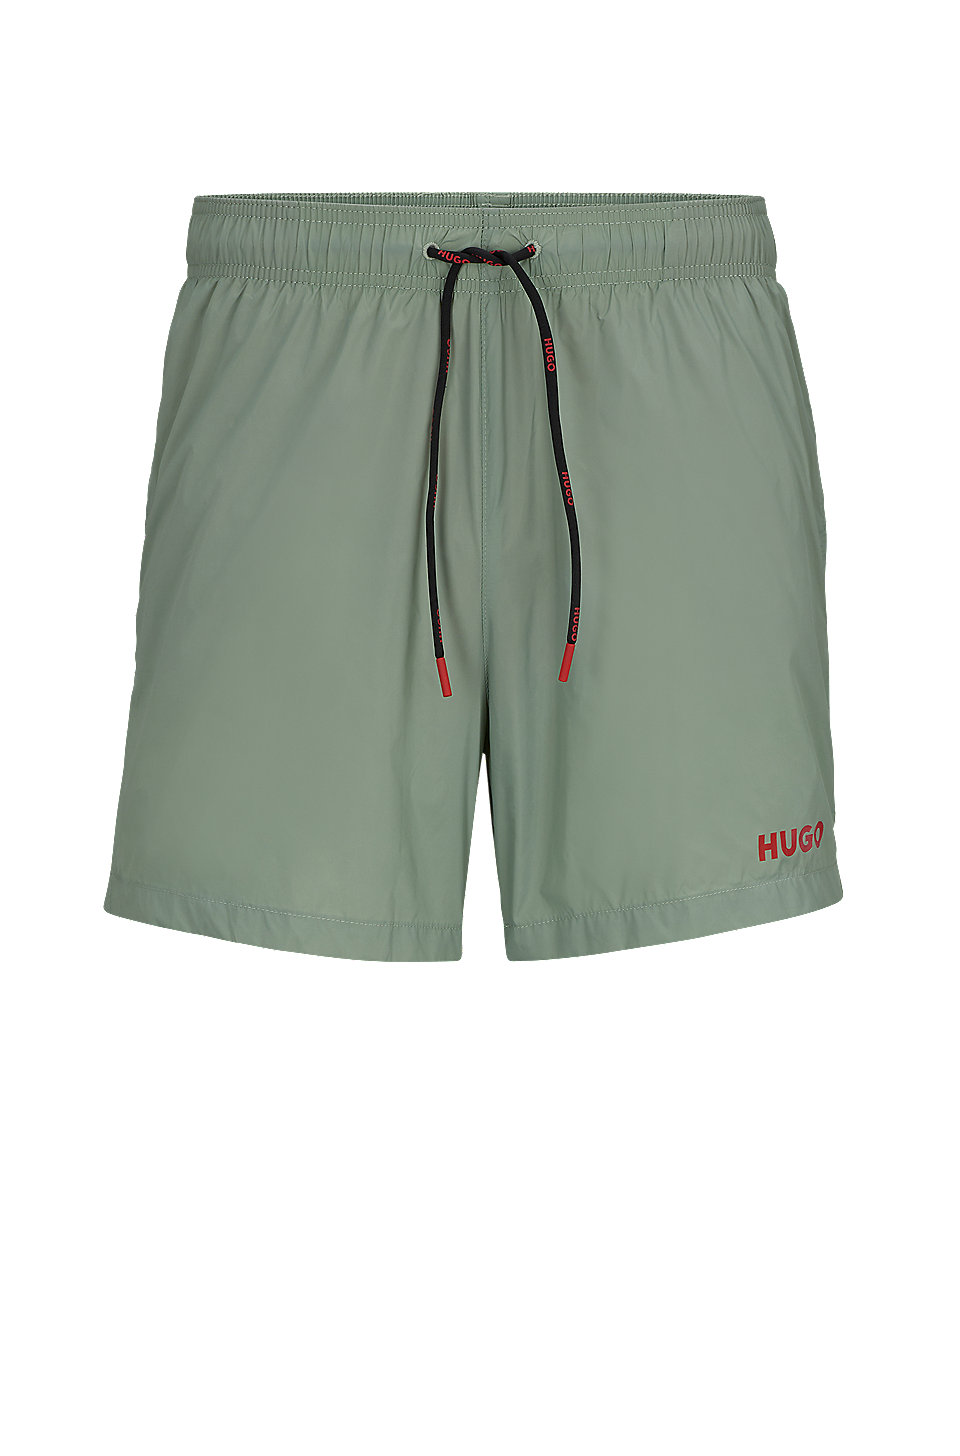 HUGO - Ultra-light, quick-dry swim shorts with logo print